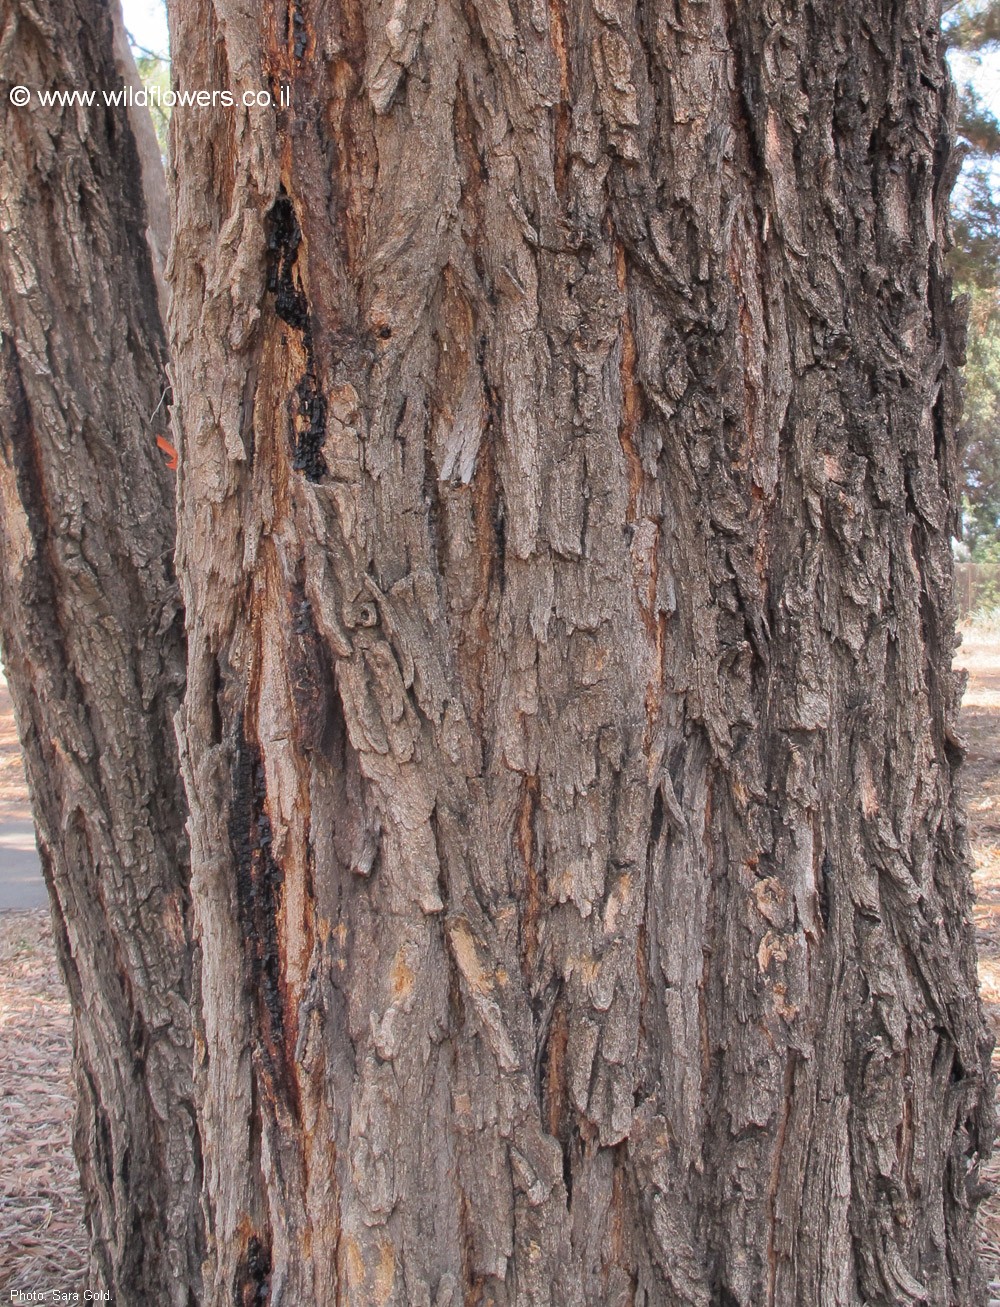 Eucalyptus resinifera